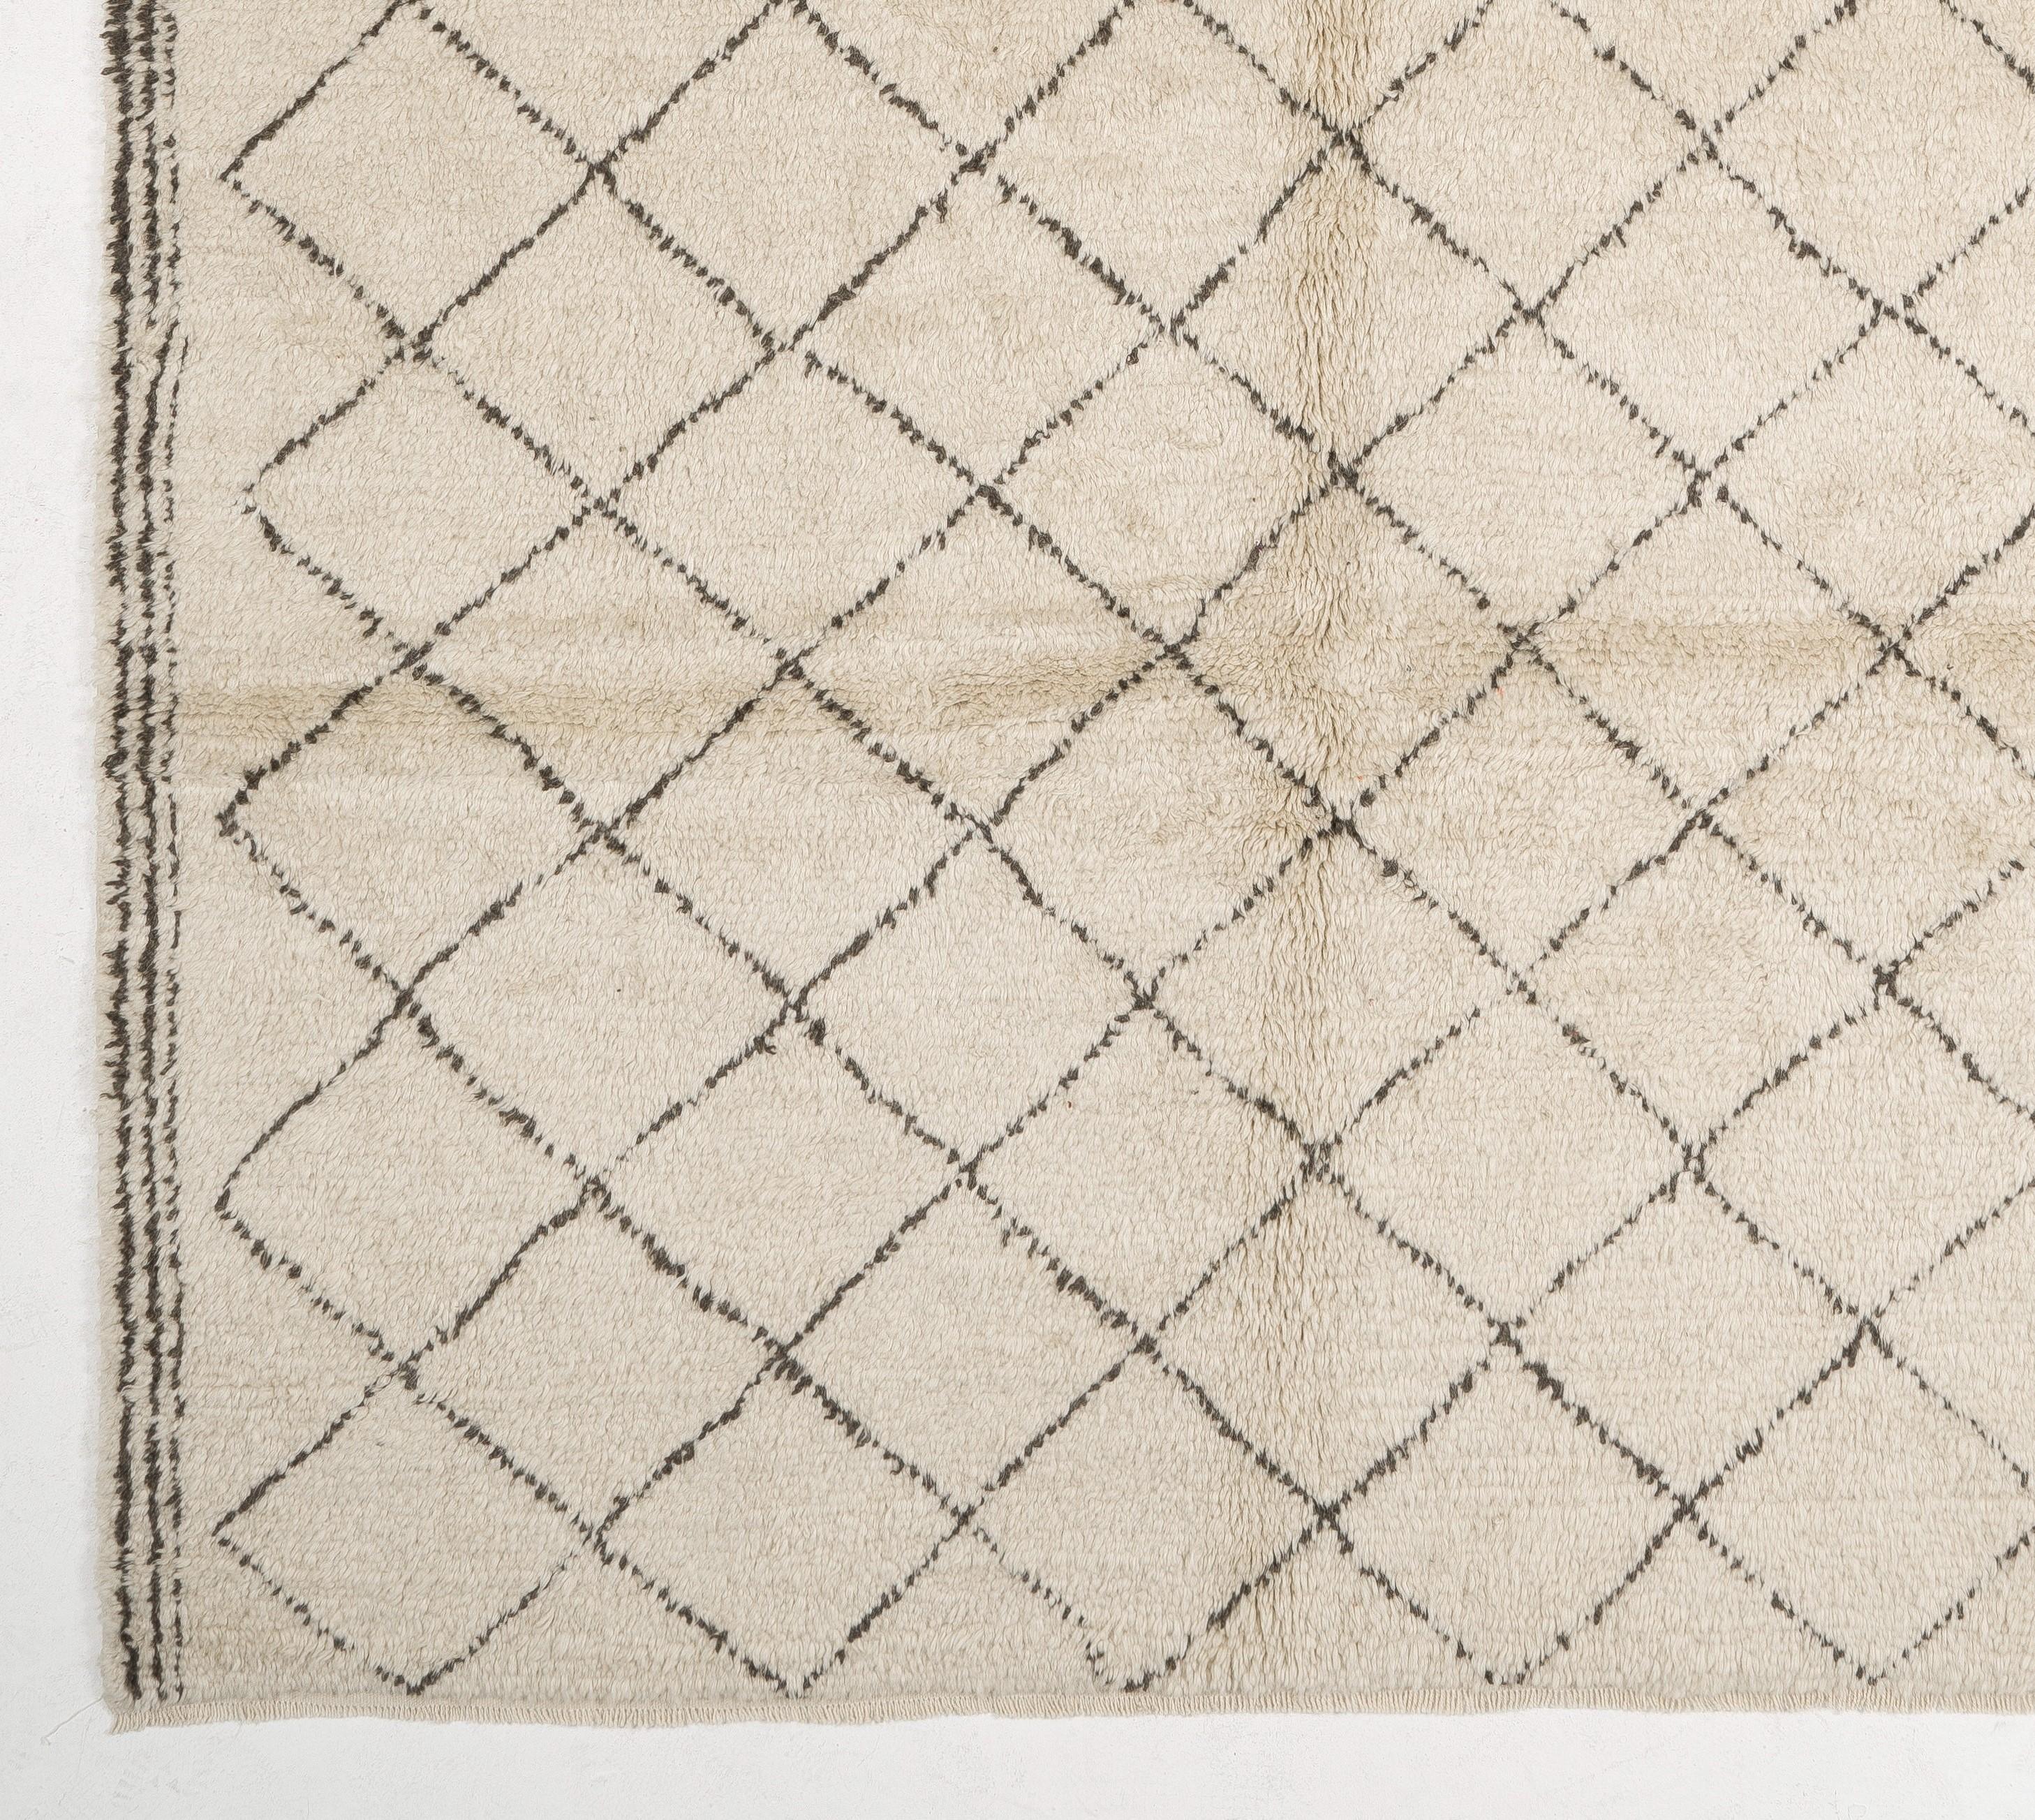 Scandinavian Modern Beni Ourain Wool Rug, Hand-Knotted Moroccan Carpet, Custom Option Avl. For Sale